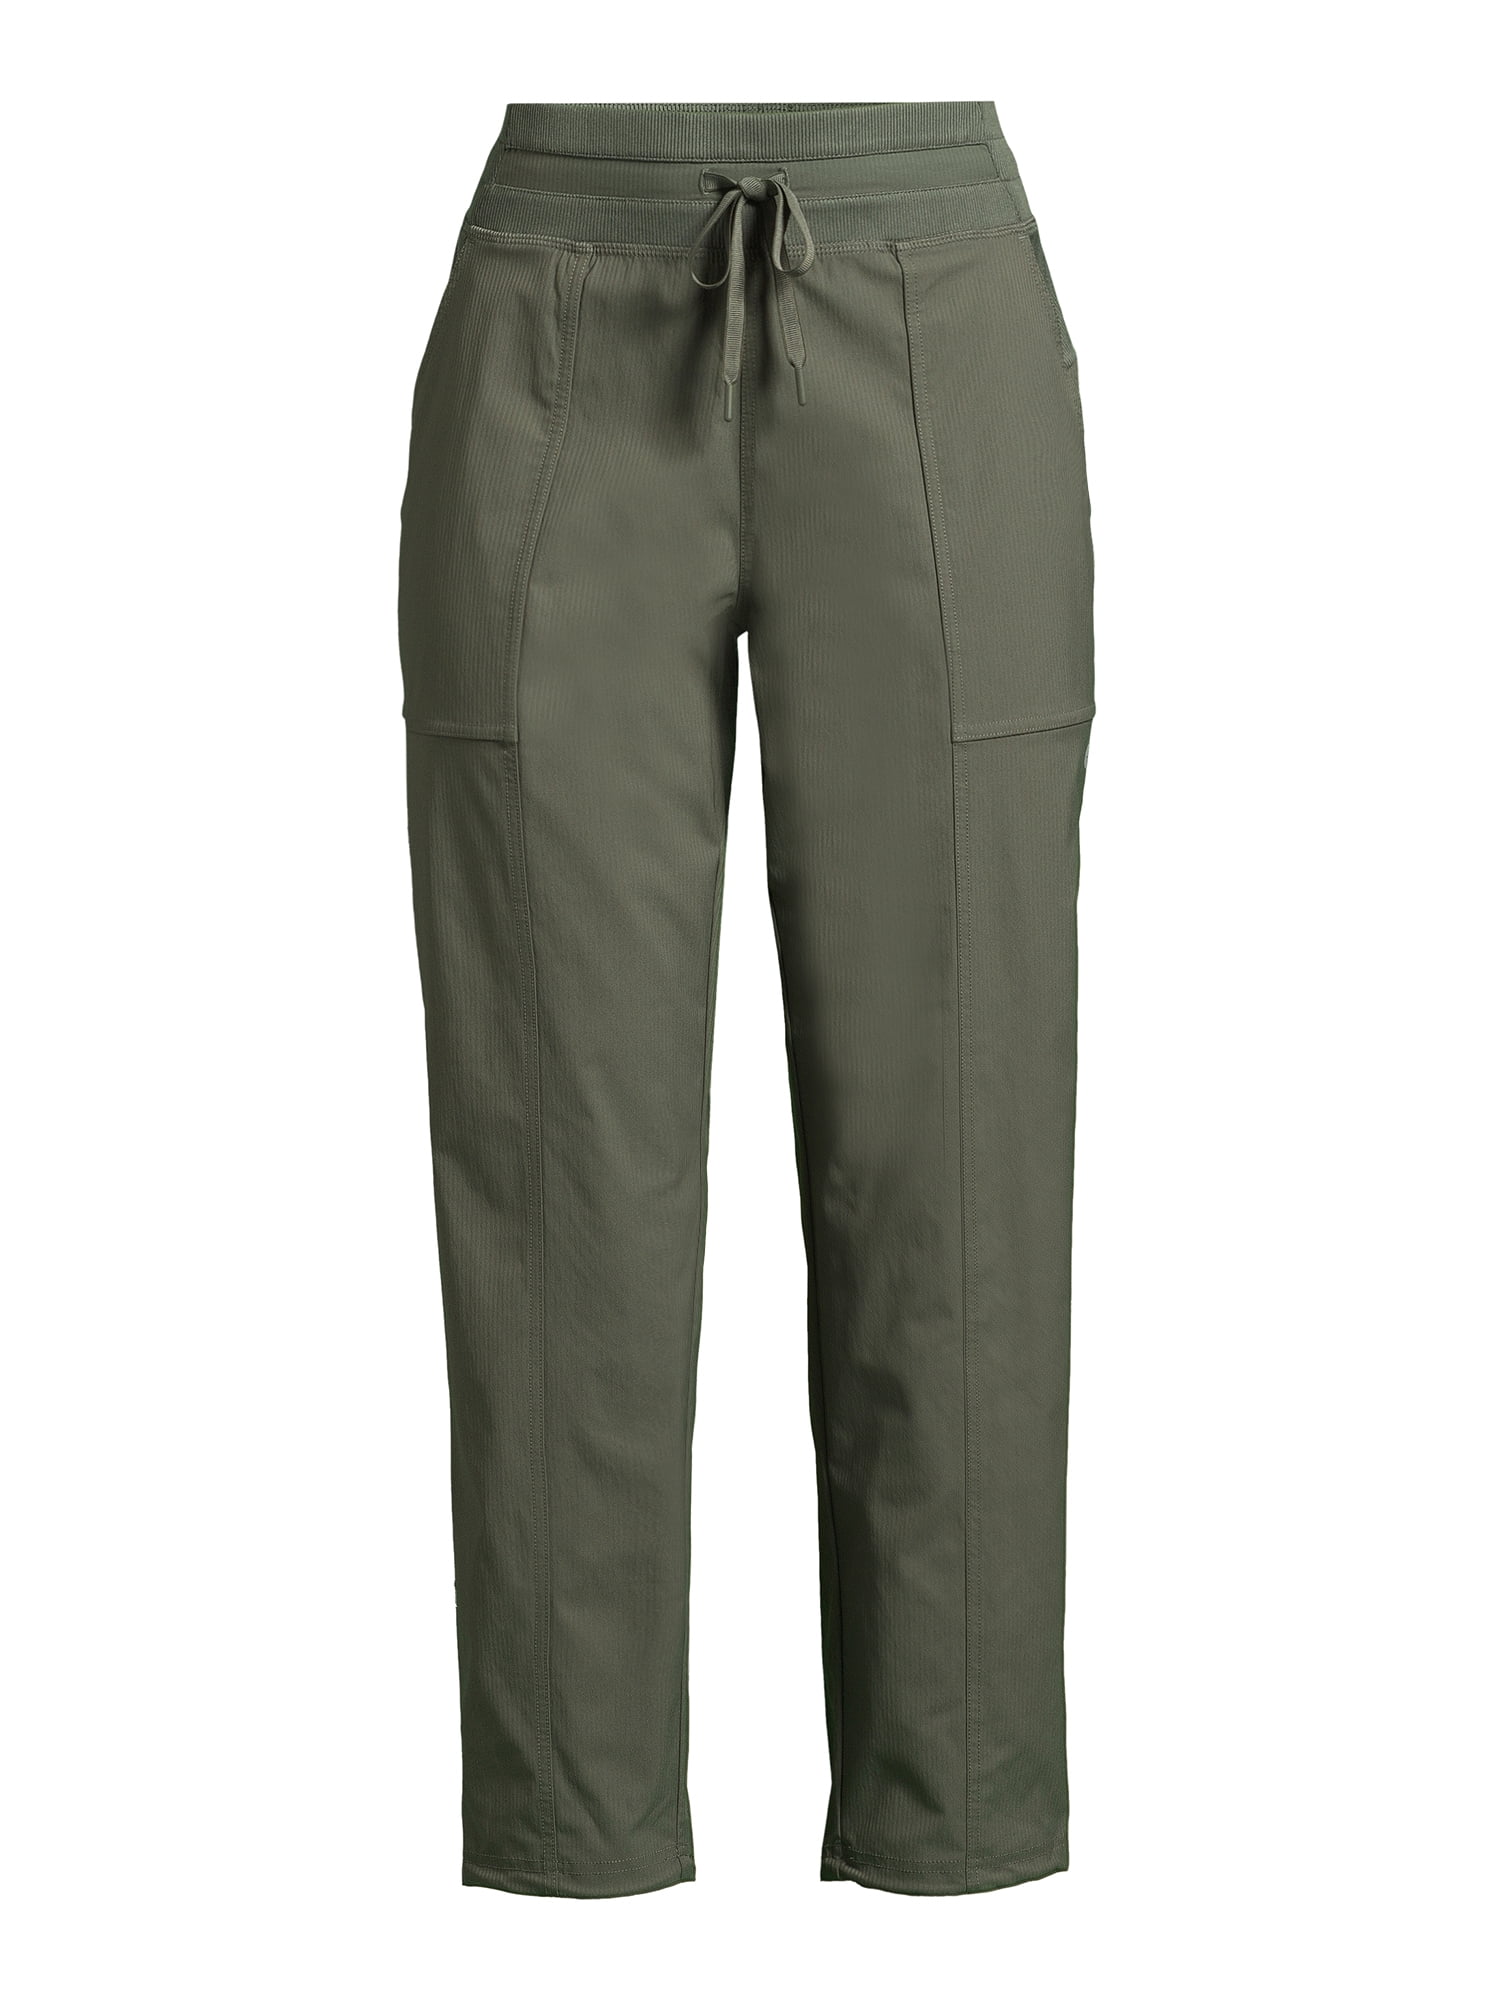 Avia Women's Pull On Commuter Pants, 27.5” Inseam, Sizes XS-XXXL 